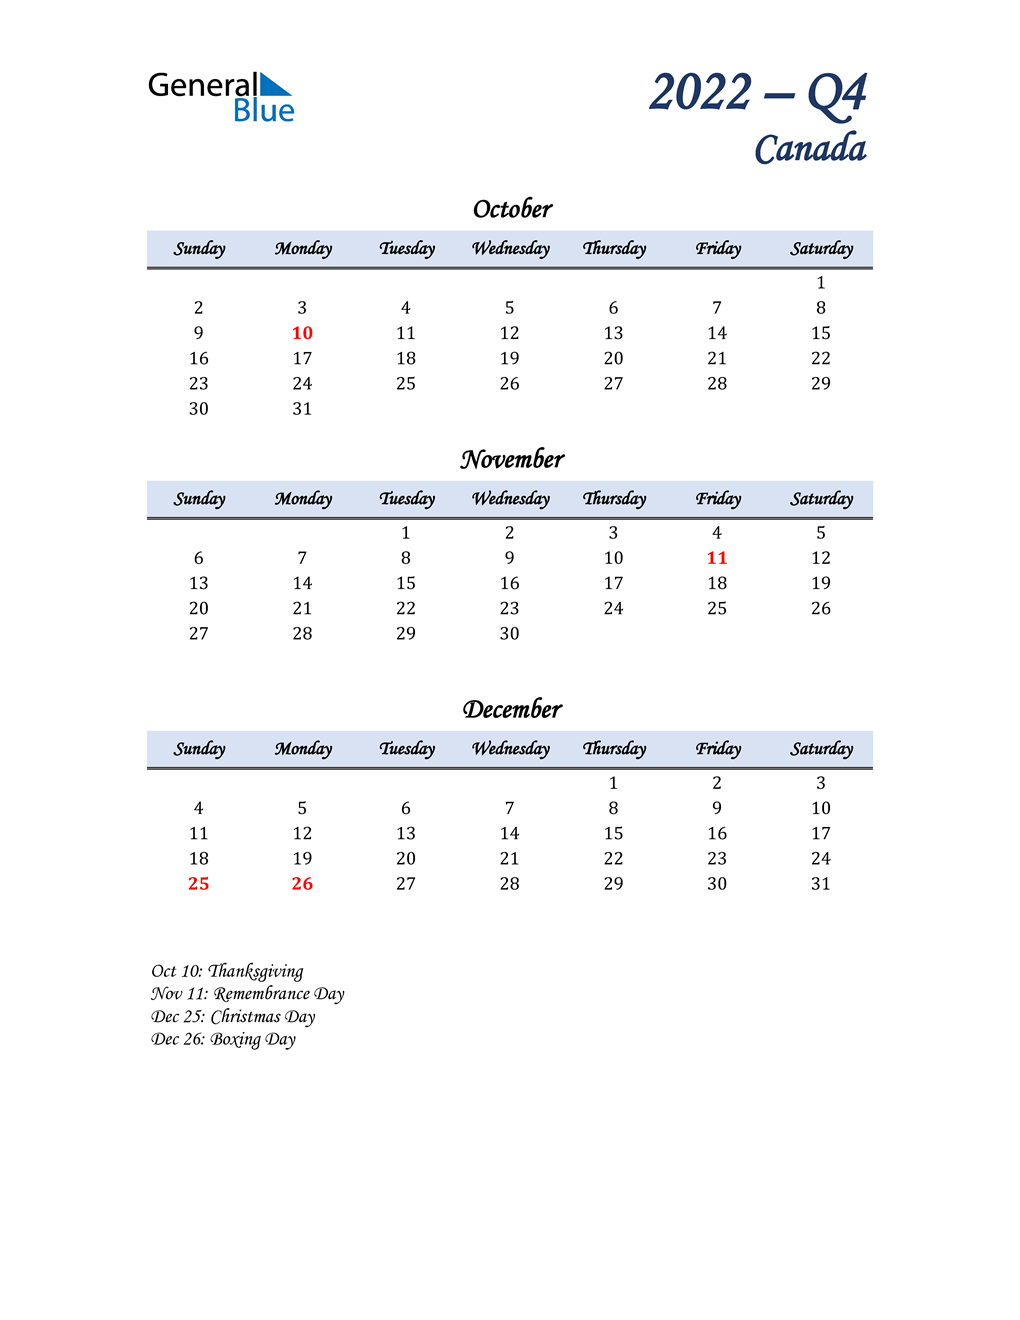  October, November, and December Calendar for Canada